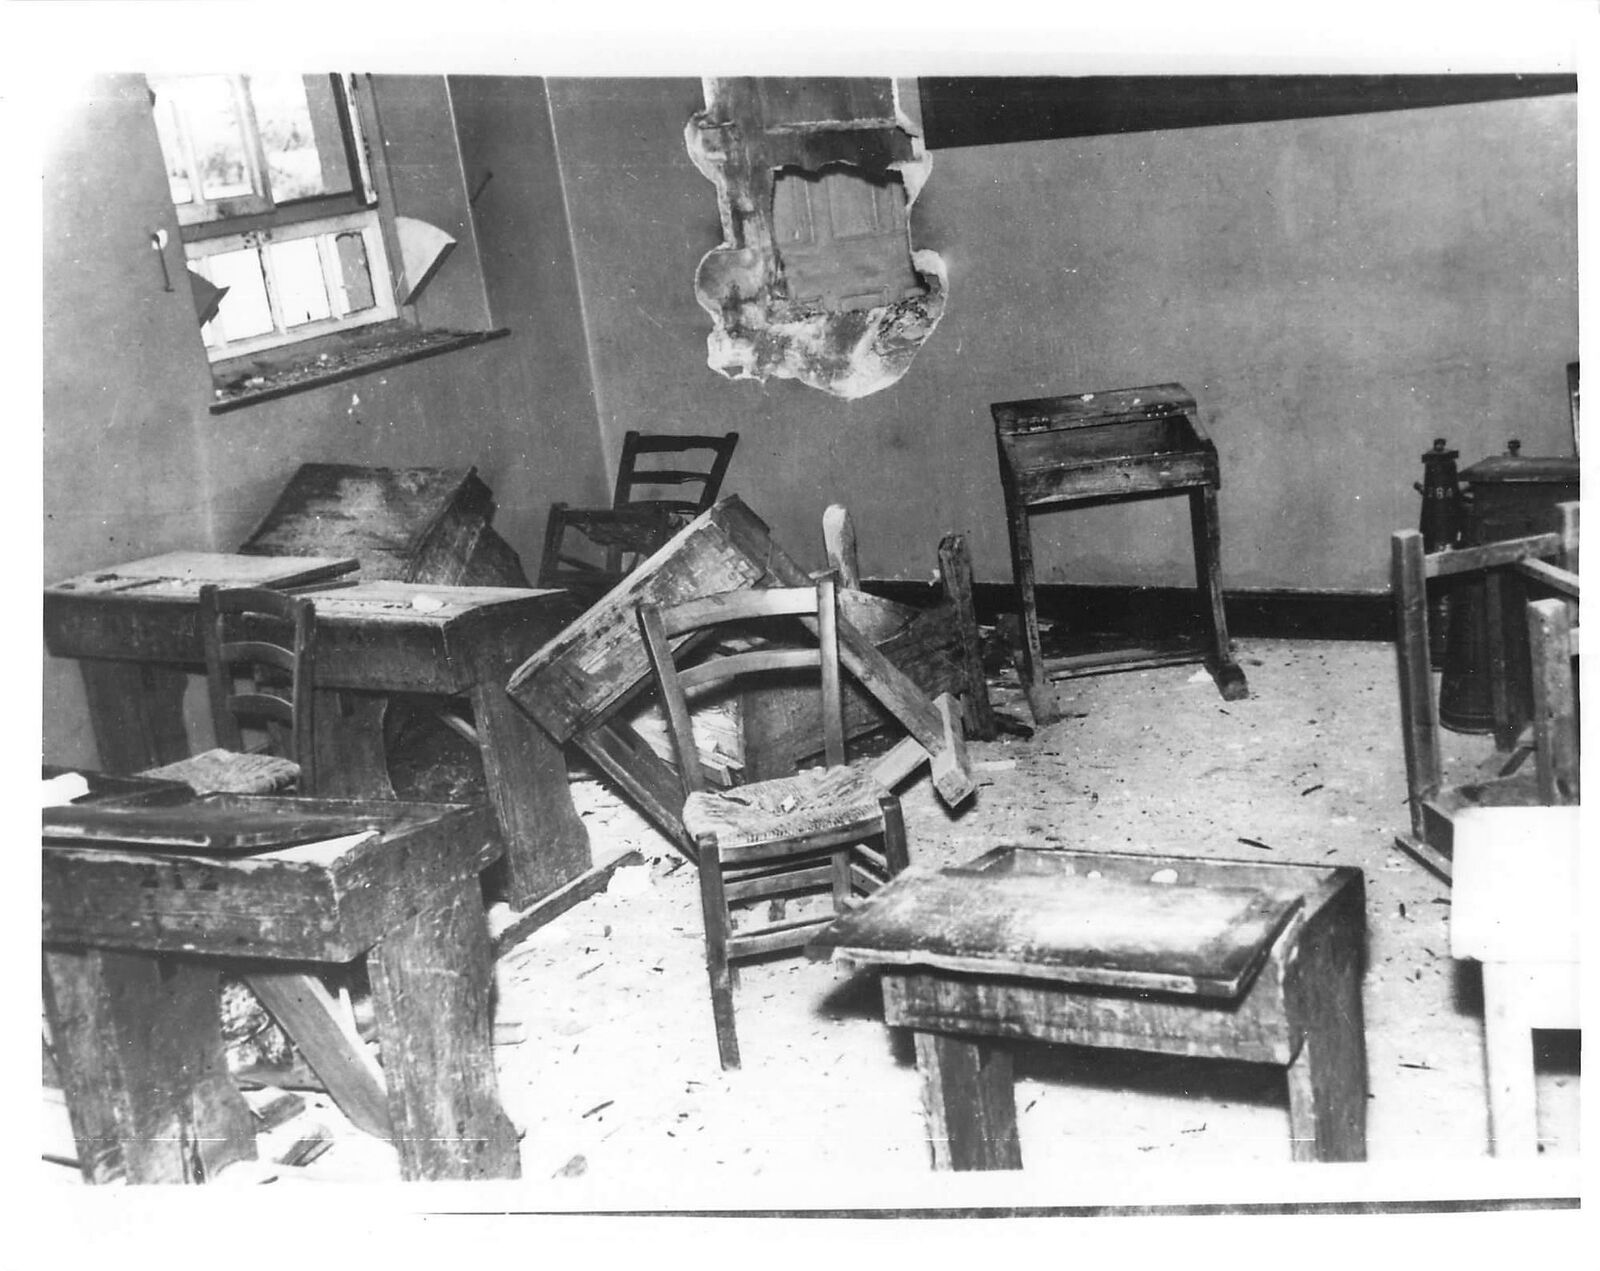 1959 Press Photo Nicosia English School Exploded by Bombs Damaged Classroom kg